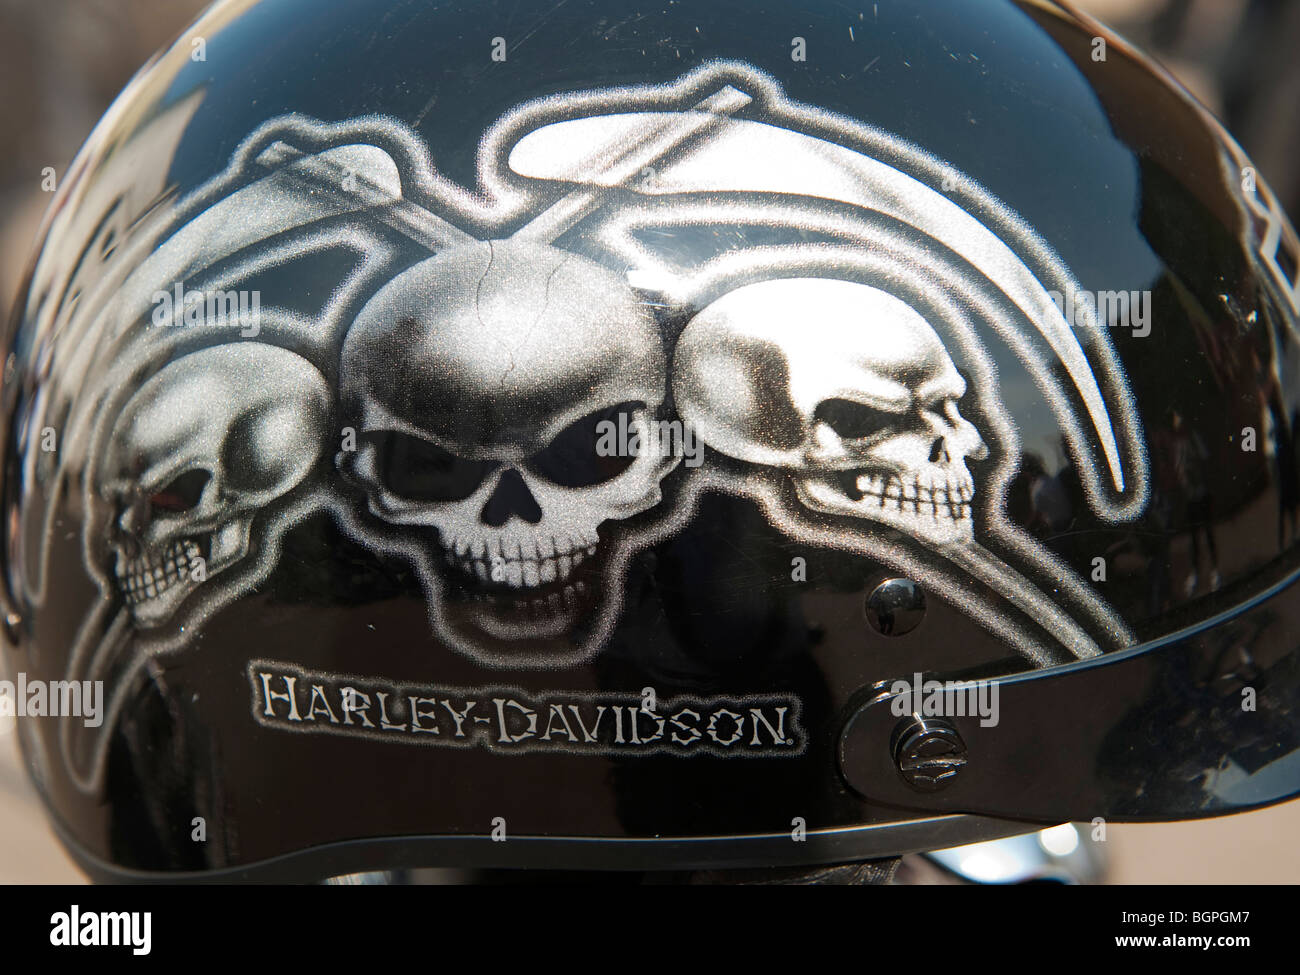 Harley Davidson casco Foto stock - Alamy